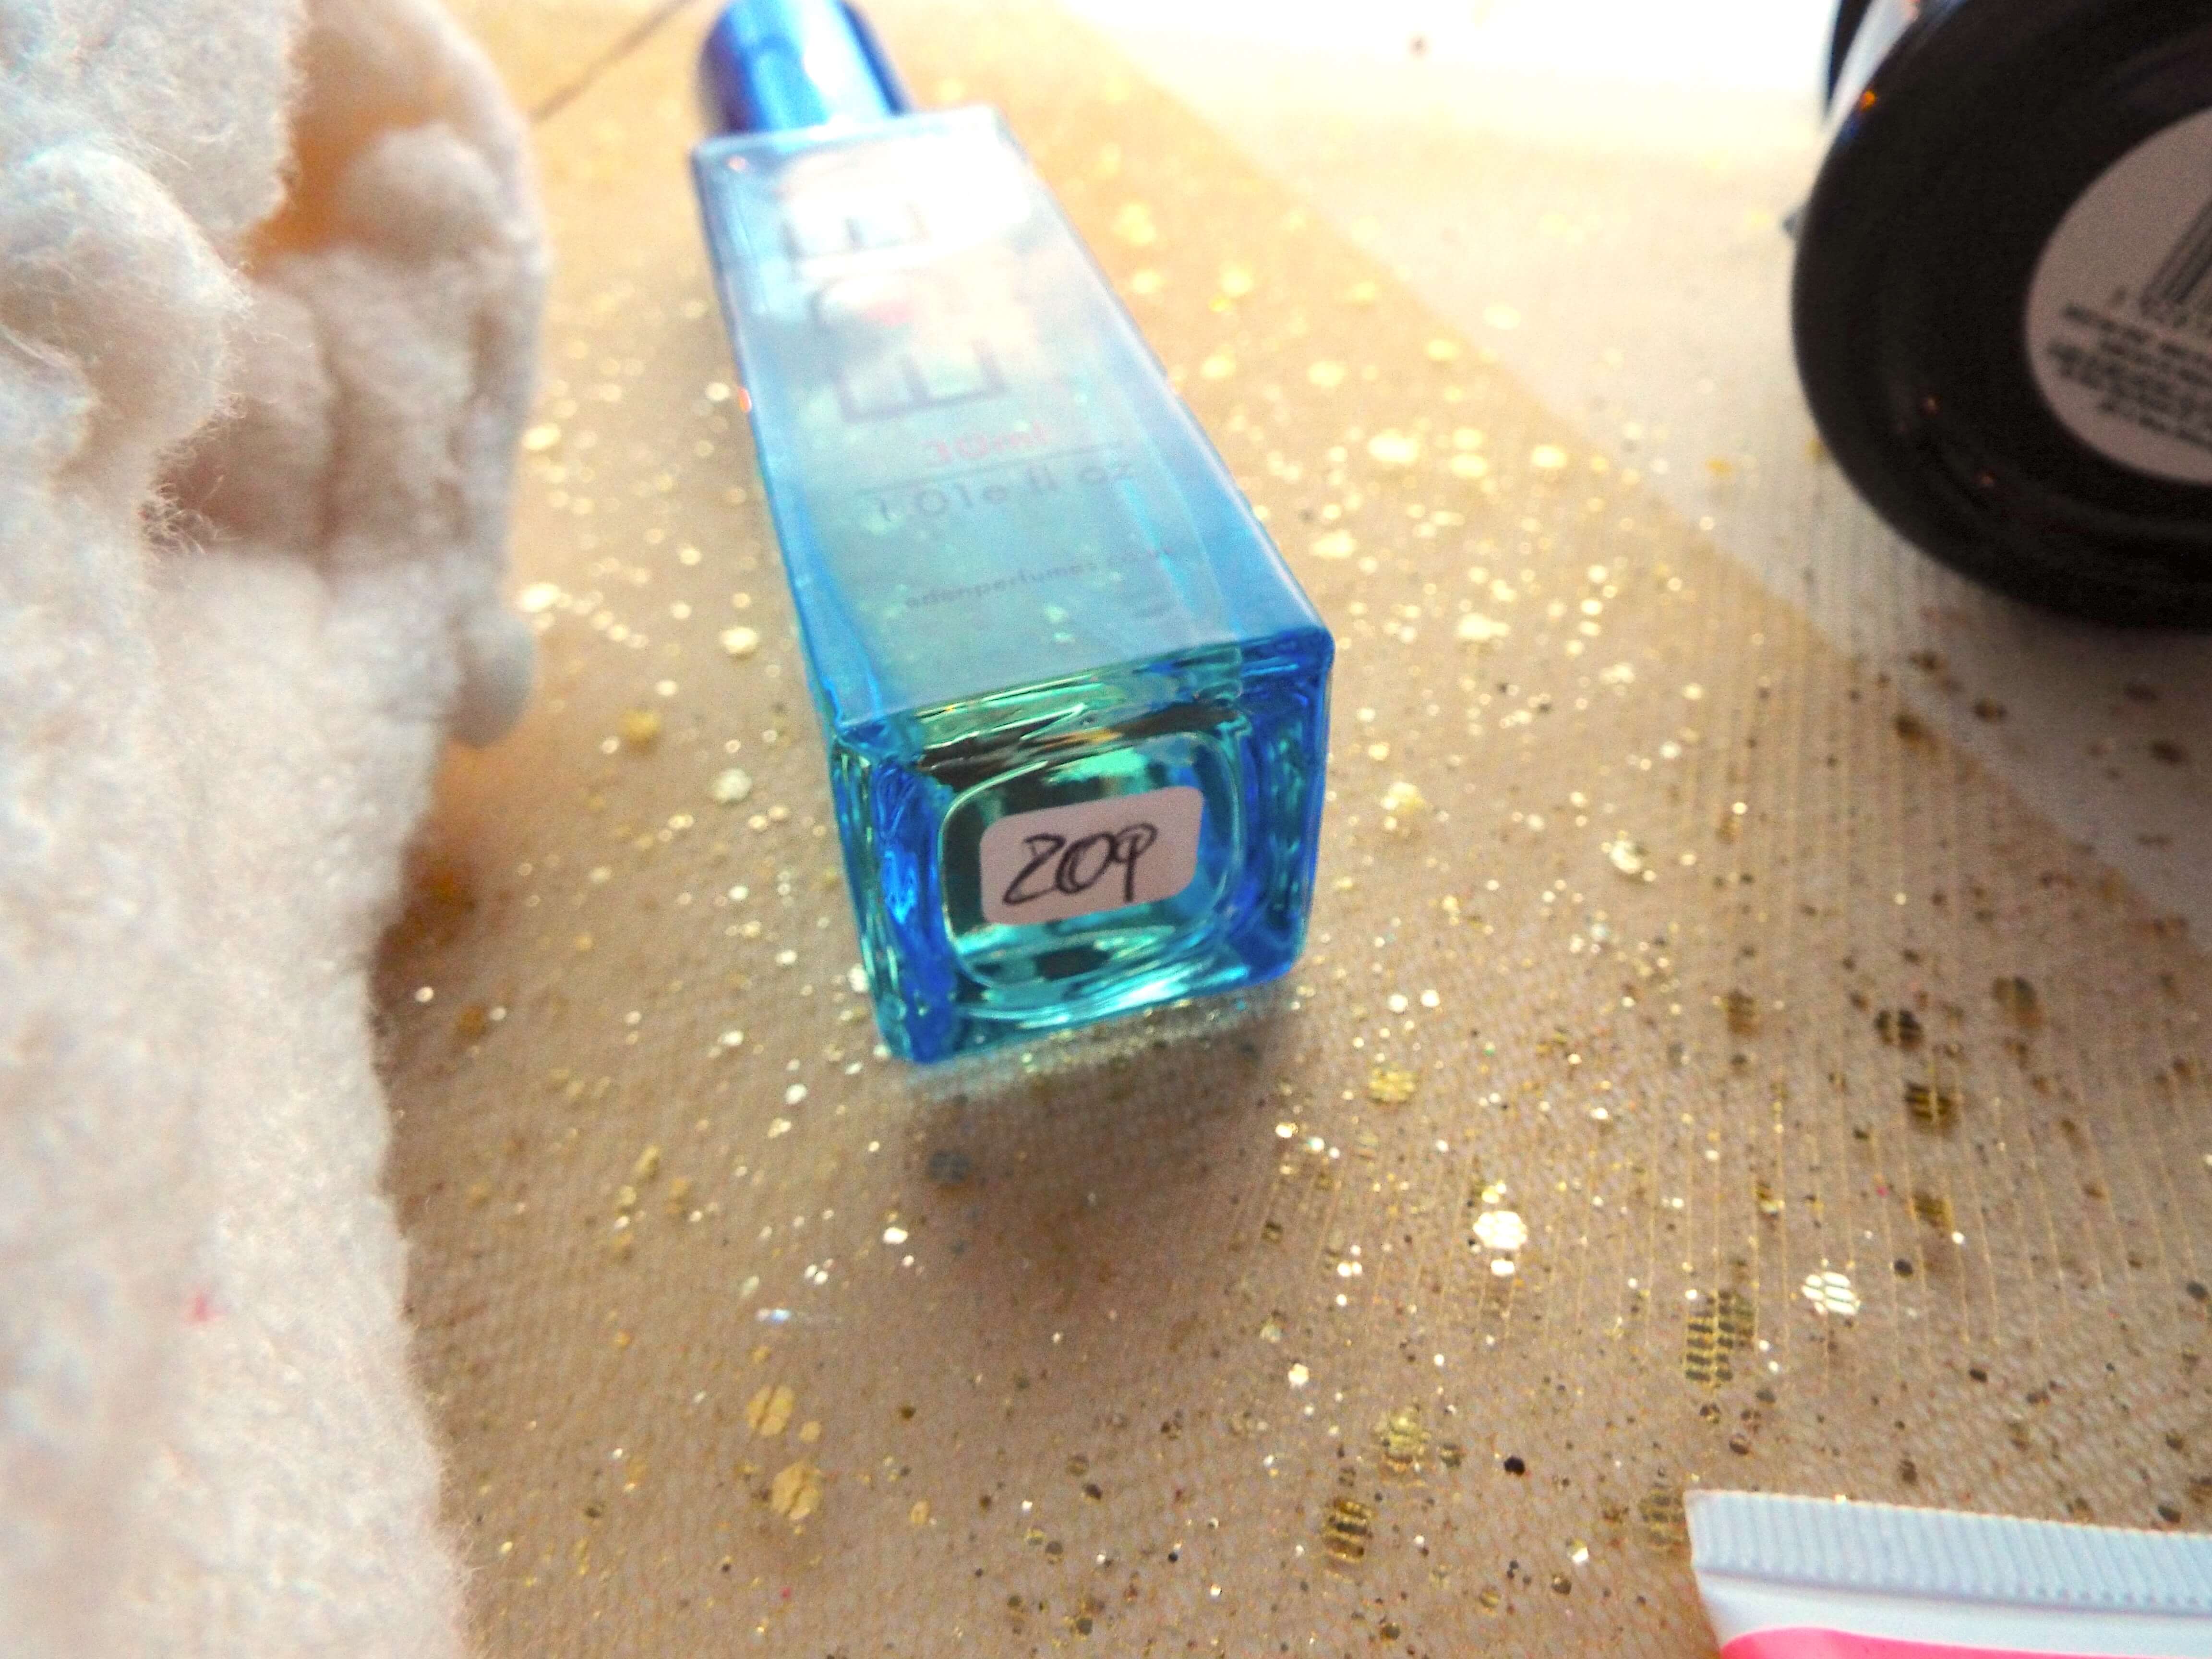 Eden vegan elixir perfume in 209, in blue bottle, lay on gold sparkly table runner, adjacent to cream cardigan.